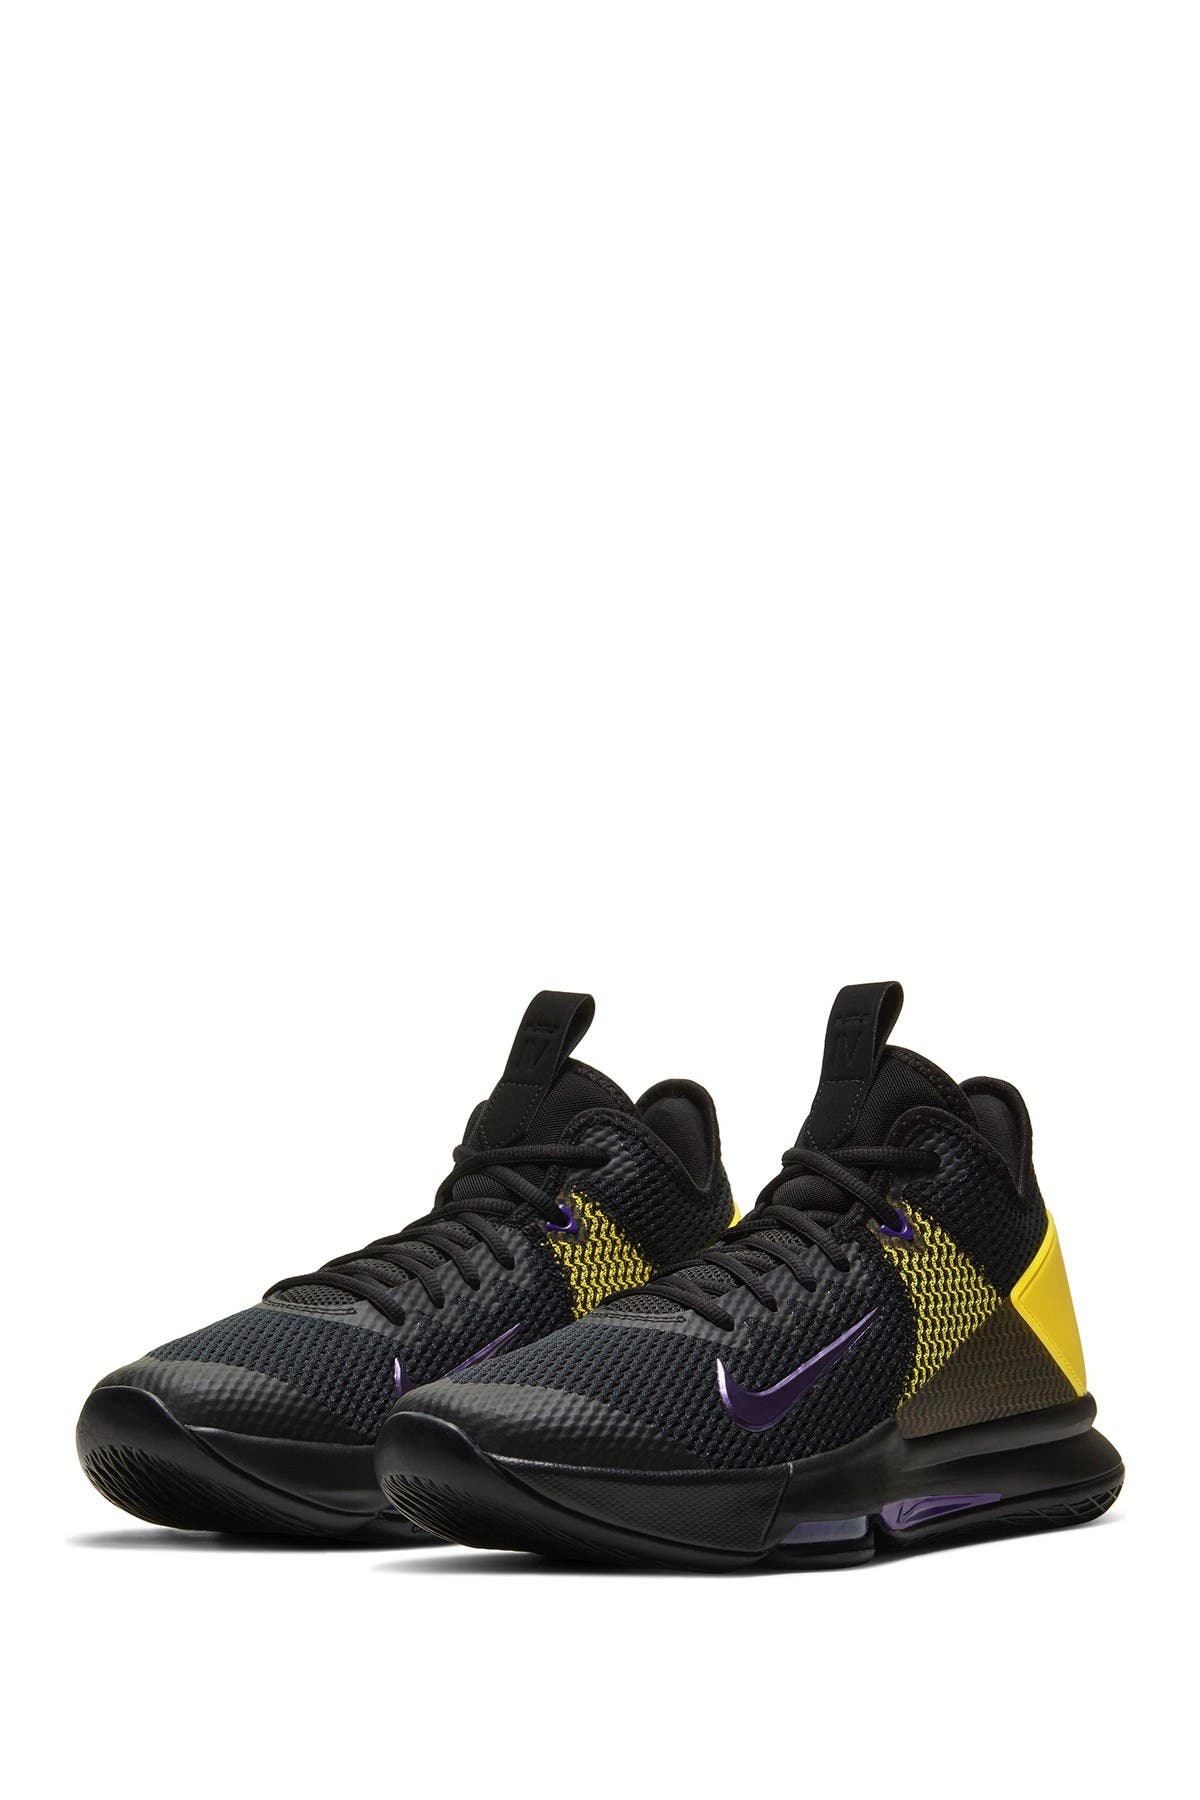 Nike | Lebron Witness 4 Basketball Shoe 